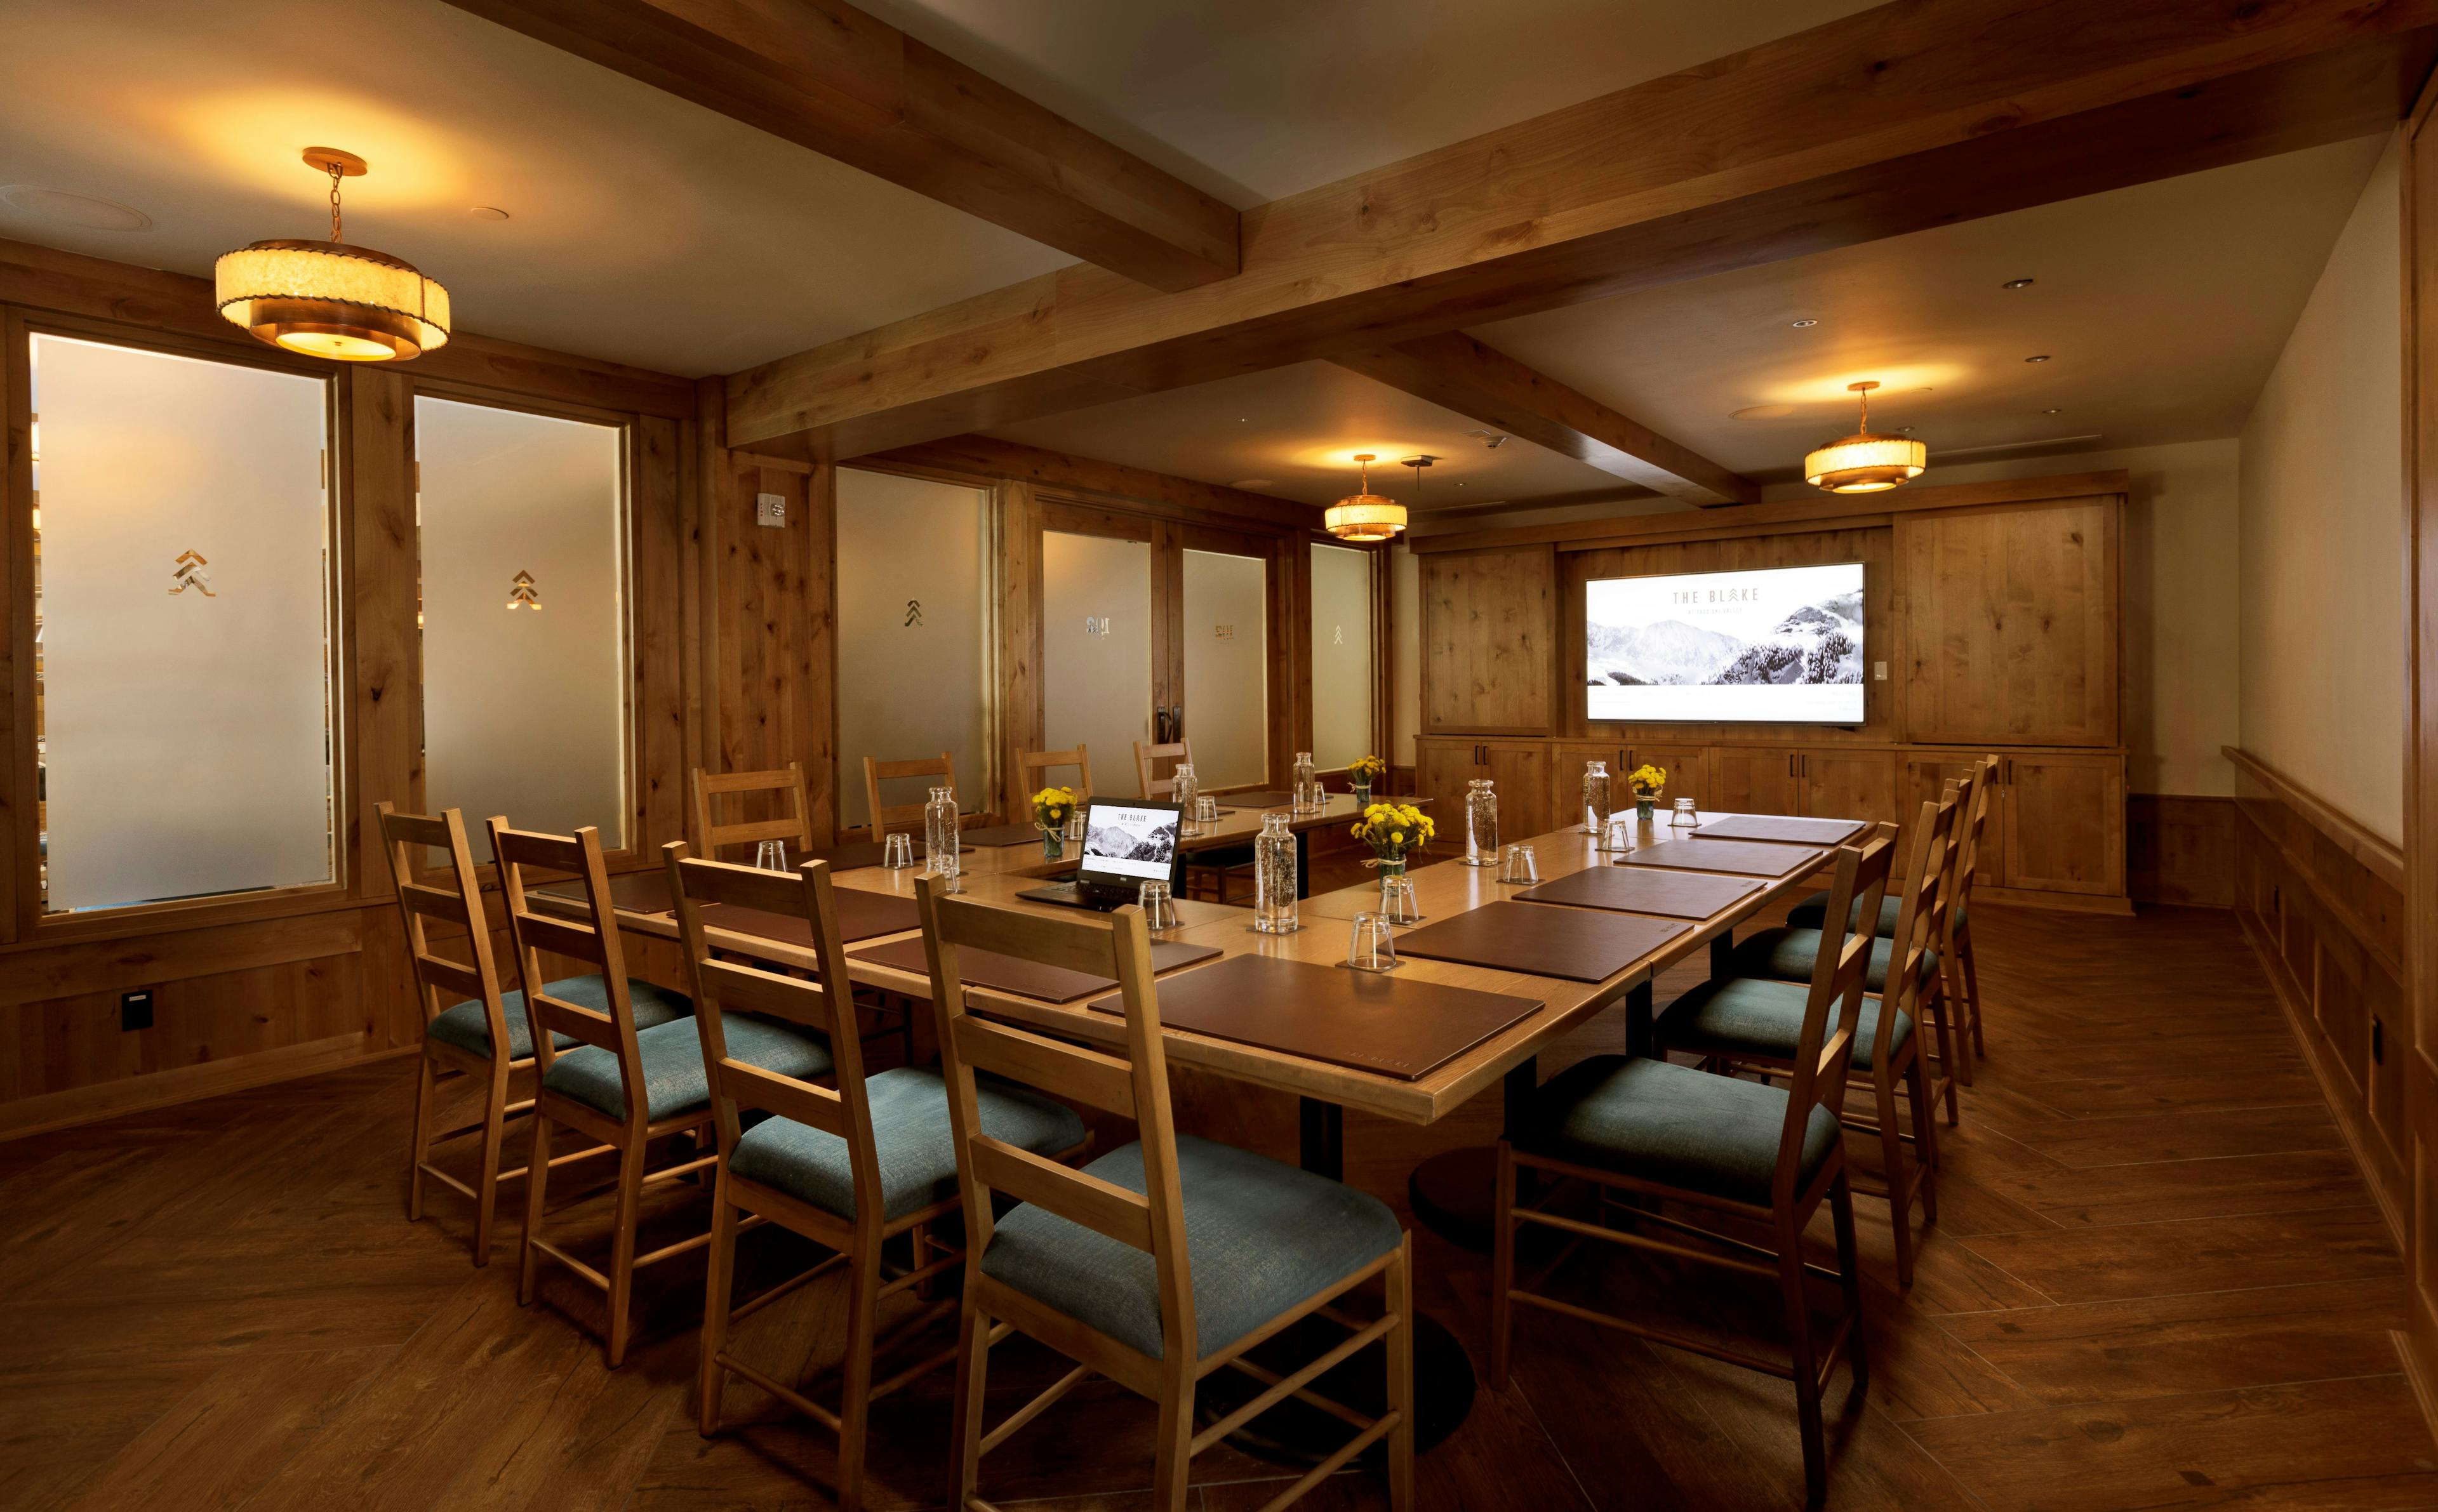 A conference room at The Blake at Taos Ski Valley.